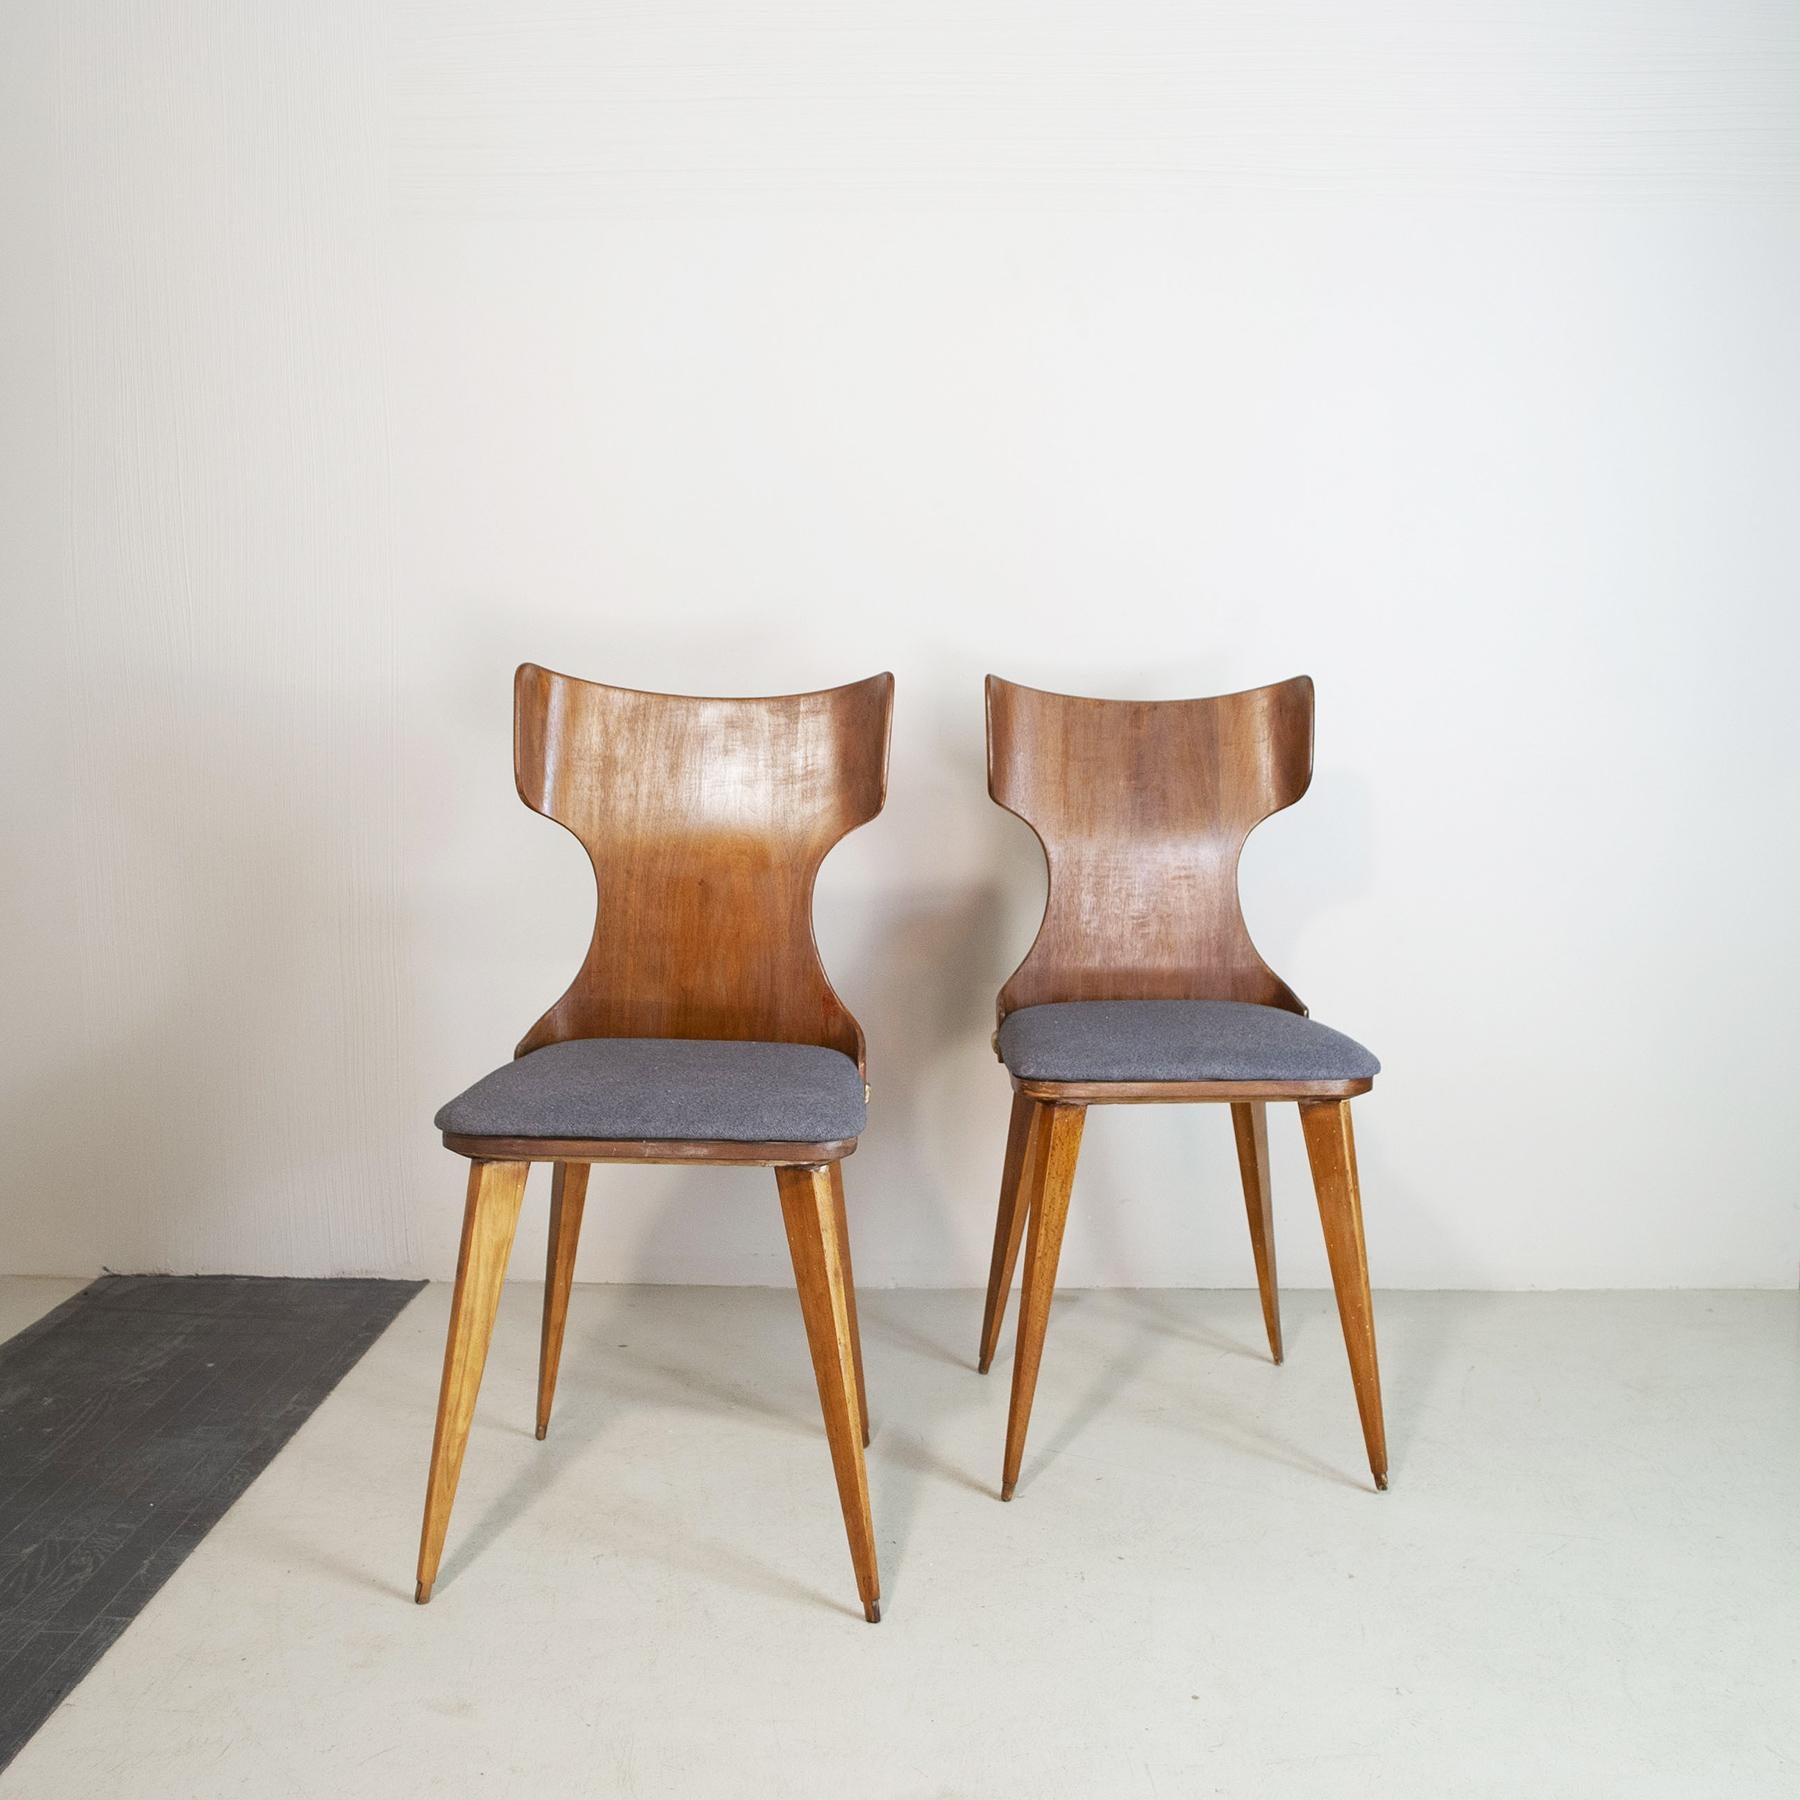 Pair of 50's bentwood chairs Designer Carlo Ratti.